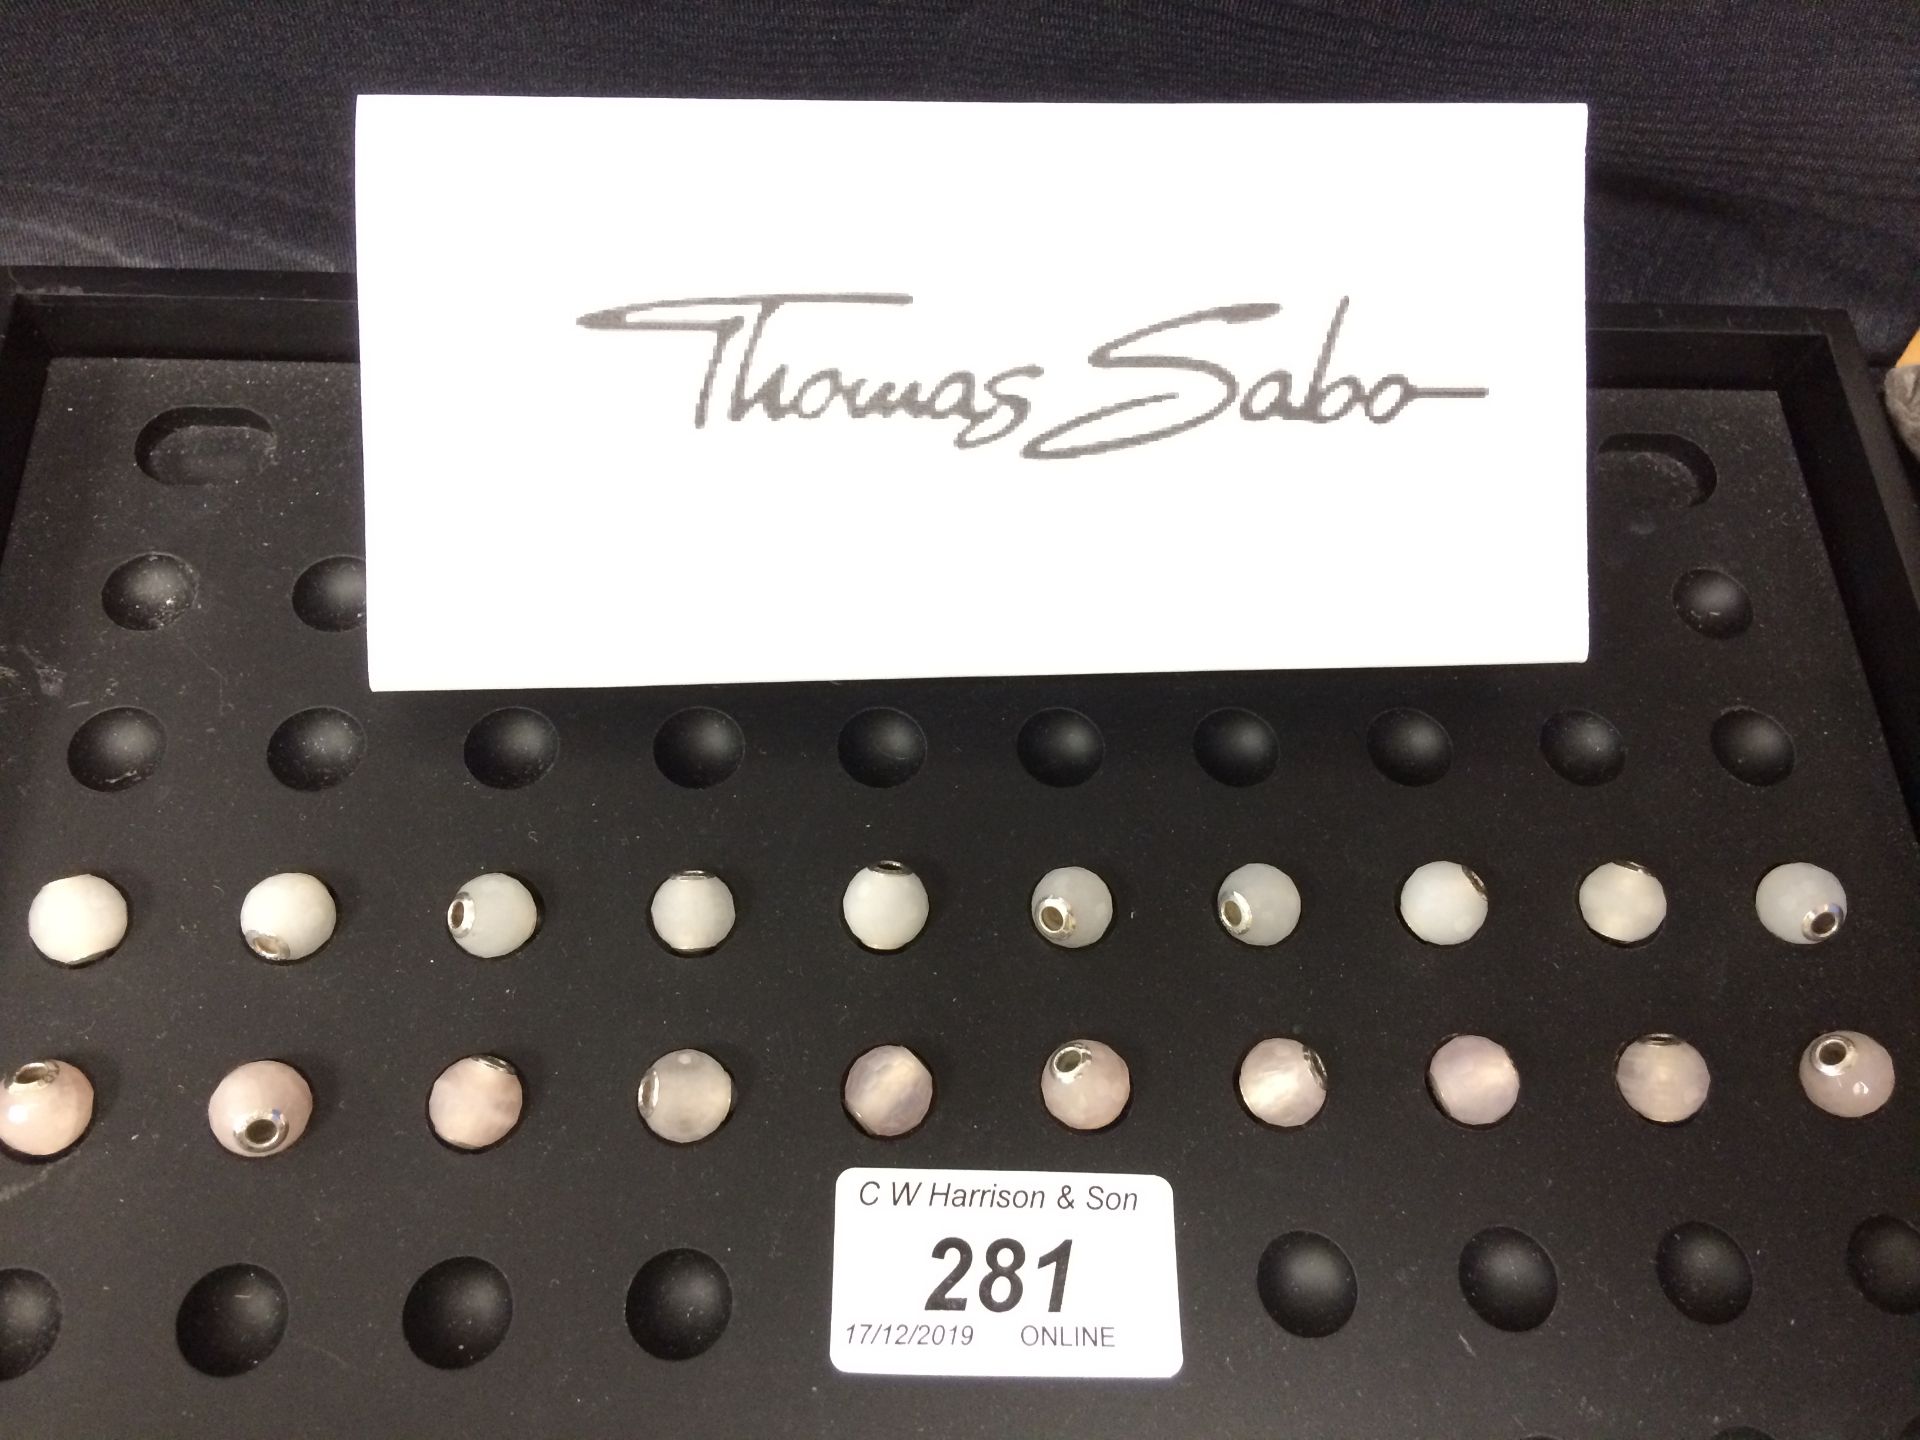 20 x Thomas Sabo 925 beads (10 x rose quartz & 10 x white jade) RRP £16.